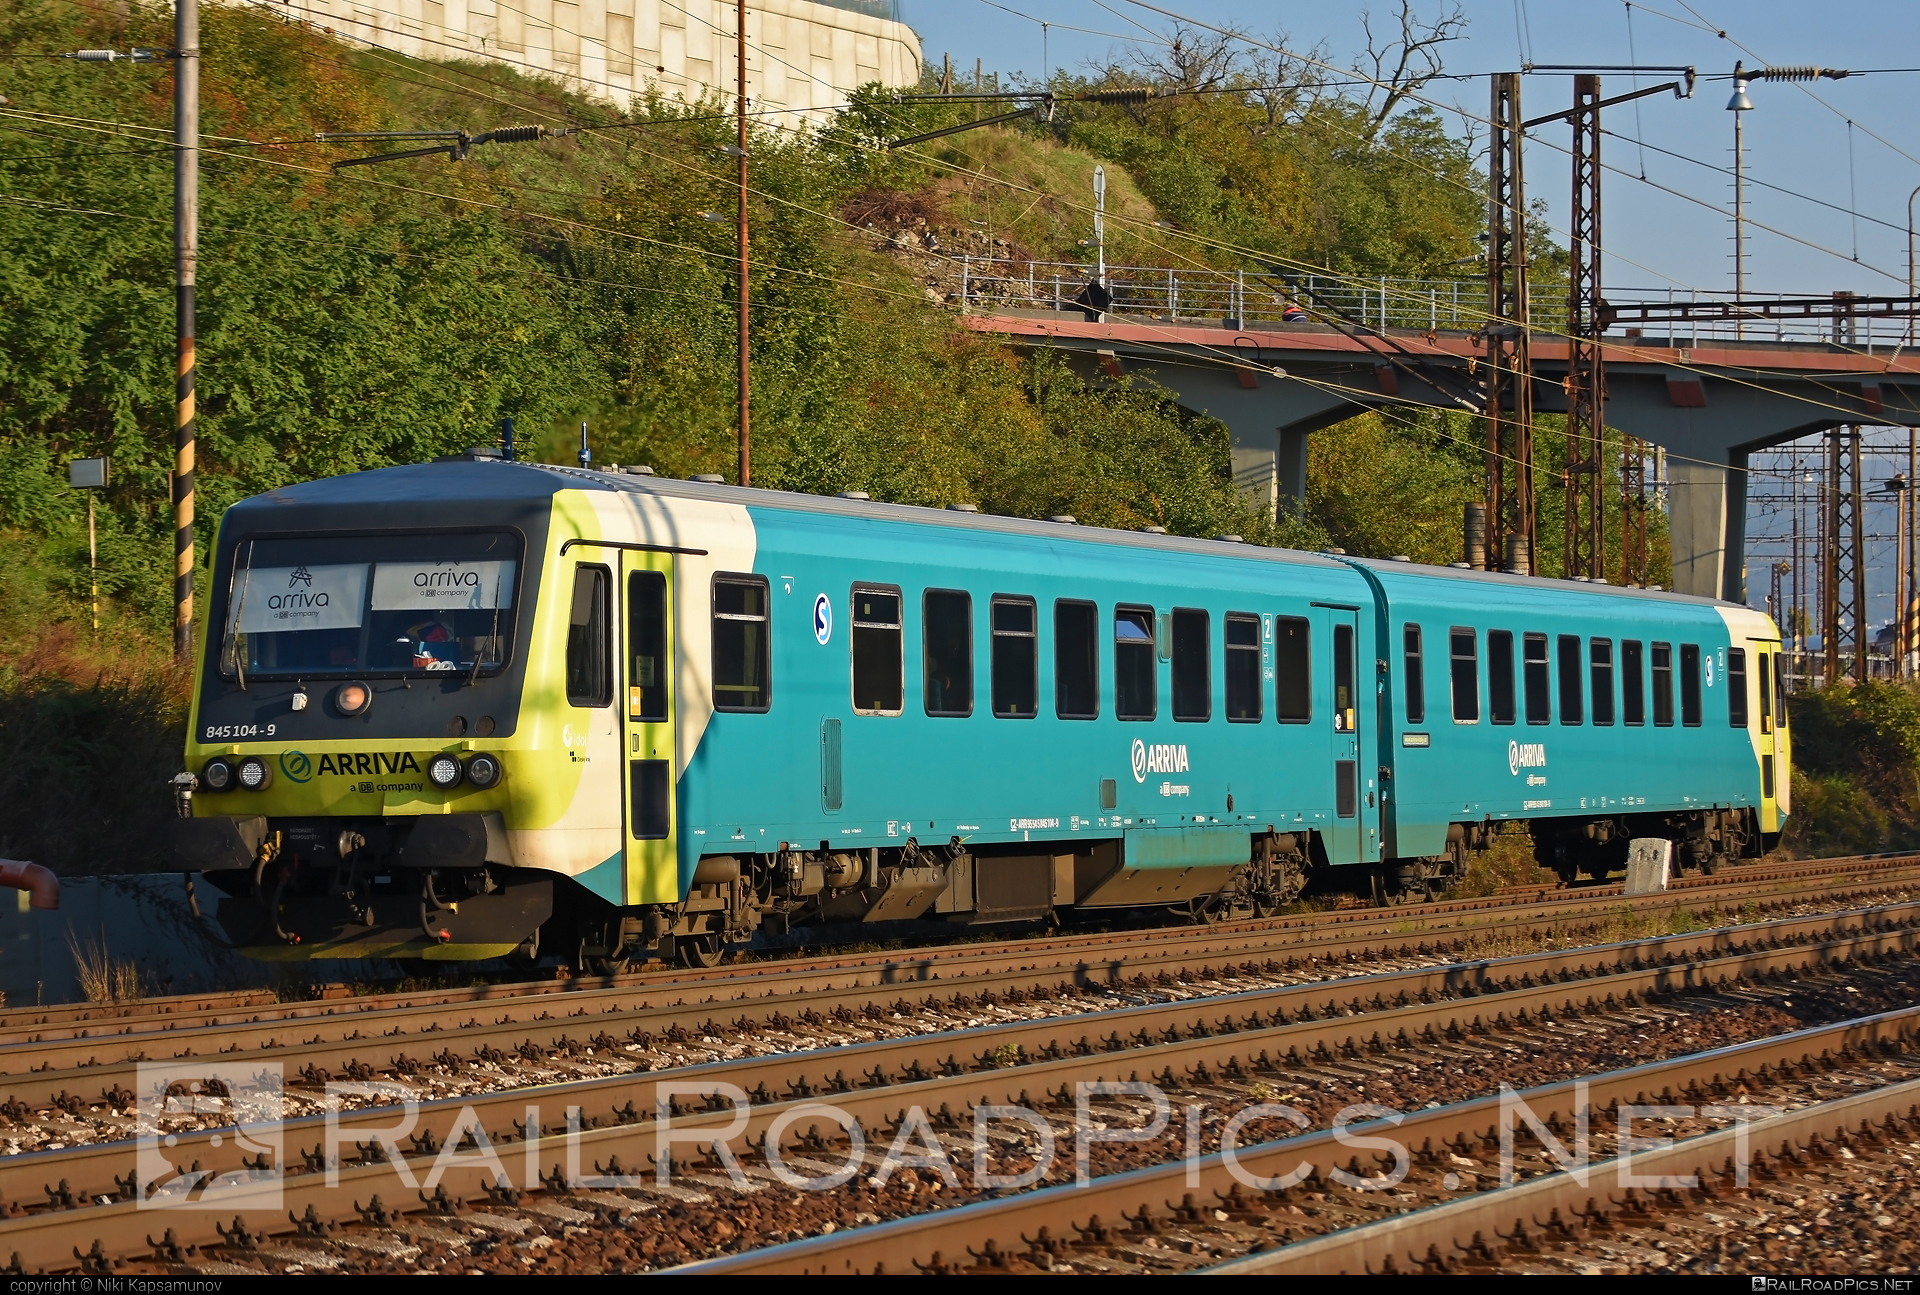 Düwag DB Class 628 - 845 104-9 operated by ARRIVA vlaky s.r.o. #arriva #arrivavlaky #arrivavlakysro #dbclass628 #duewag #duewag628 #duwag #duwag628